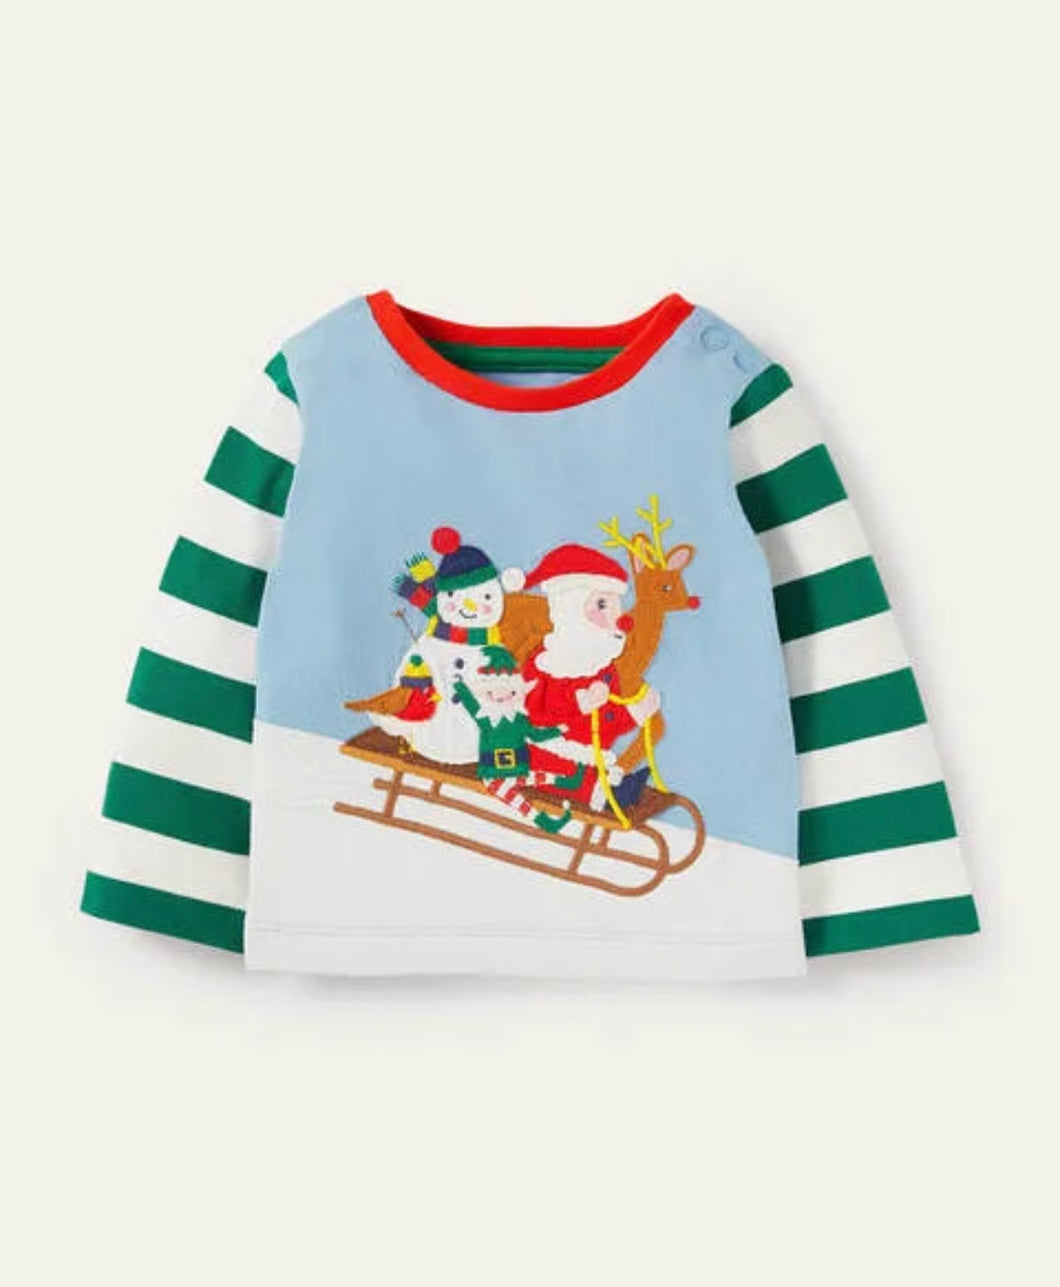 NWT Mini Boden Christmas Sleigh T-shirt